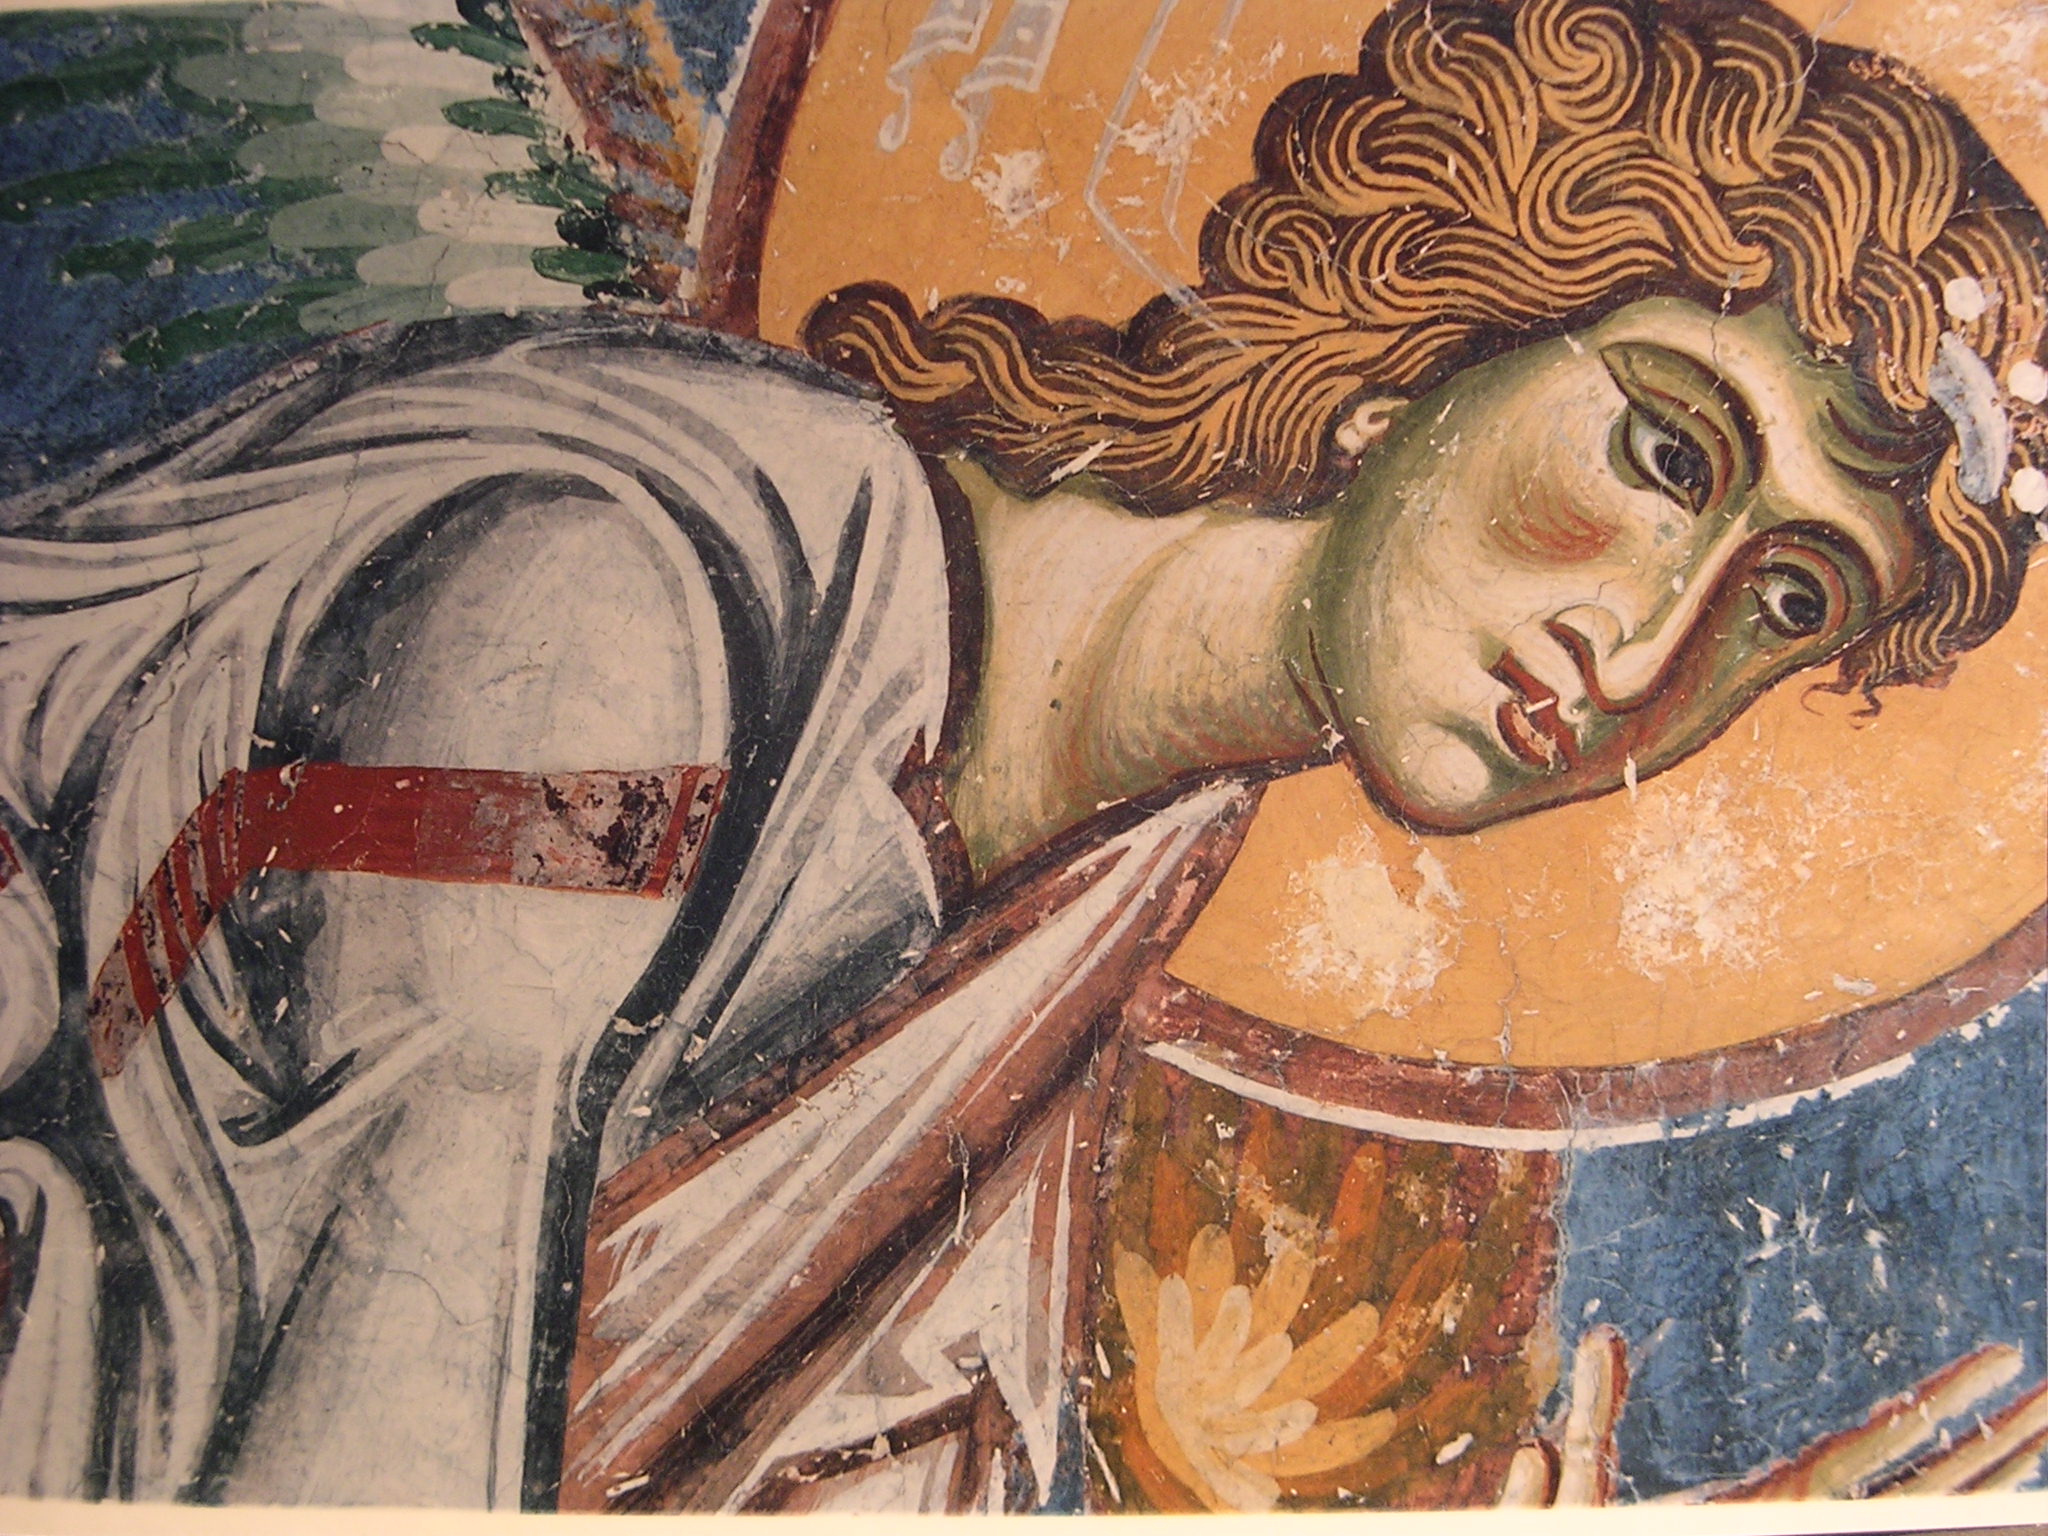 Св го. Курбиново фрески. Фрески церкви Святого Георгия в Курбиново, Македония. 1191 Год.